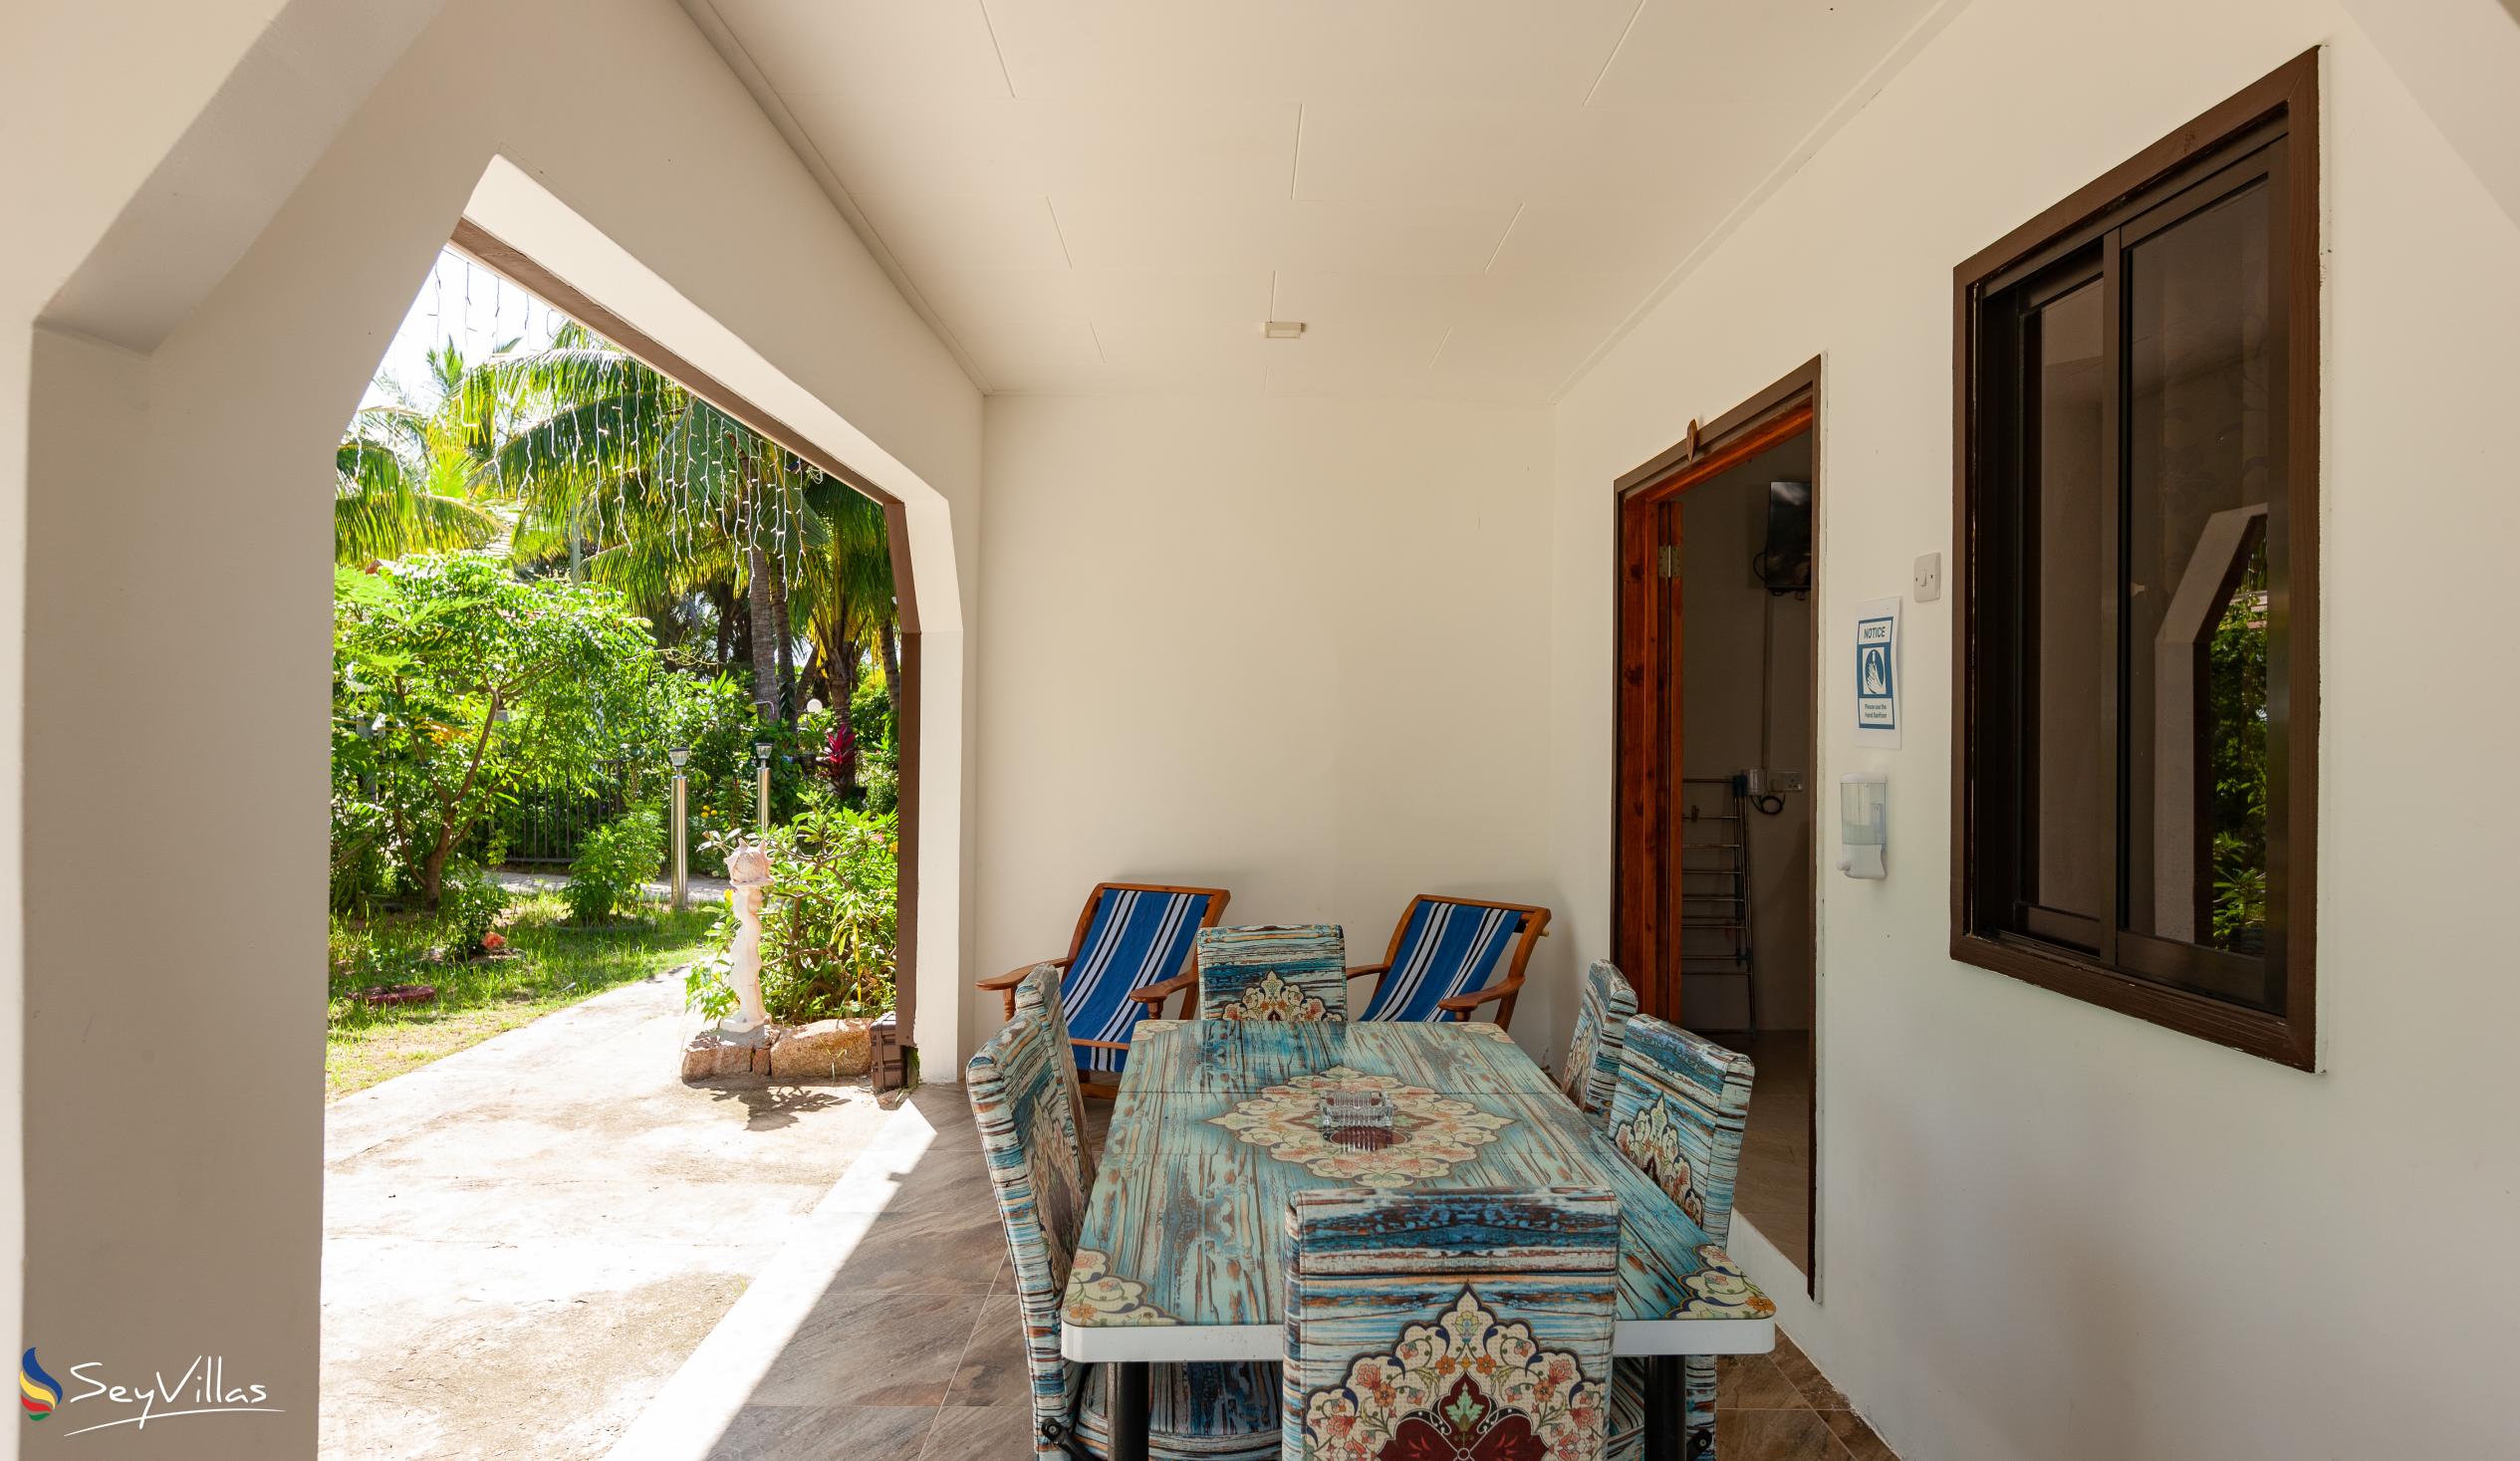 Foto 42: Anse Grosse Roche Beach Villa - Familienappartement mit 2 Schlafzimmern - La Digue (Seychellen)